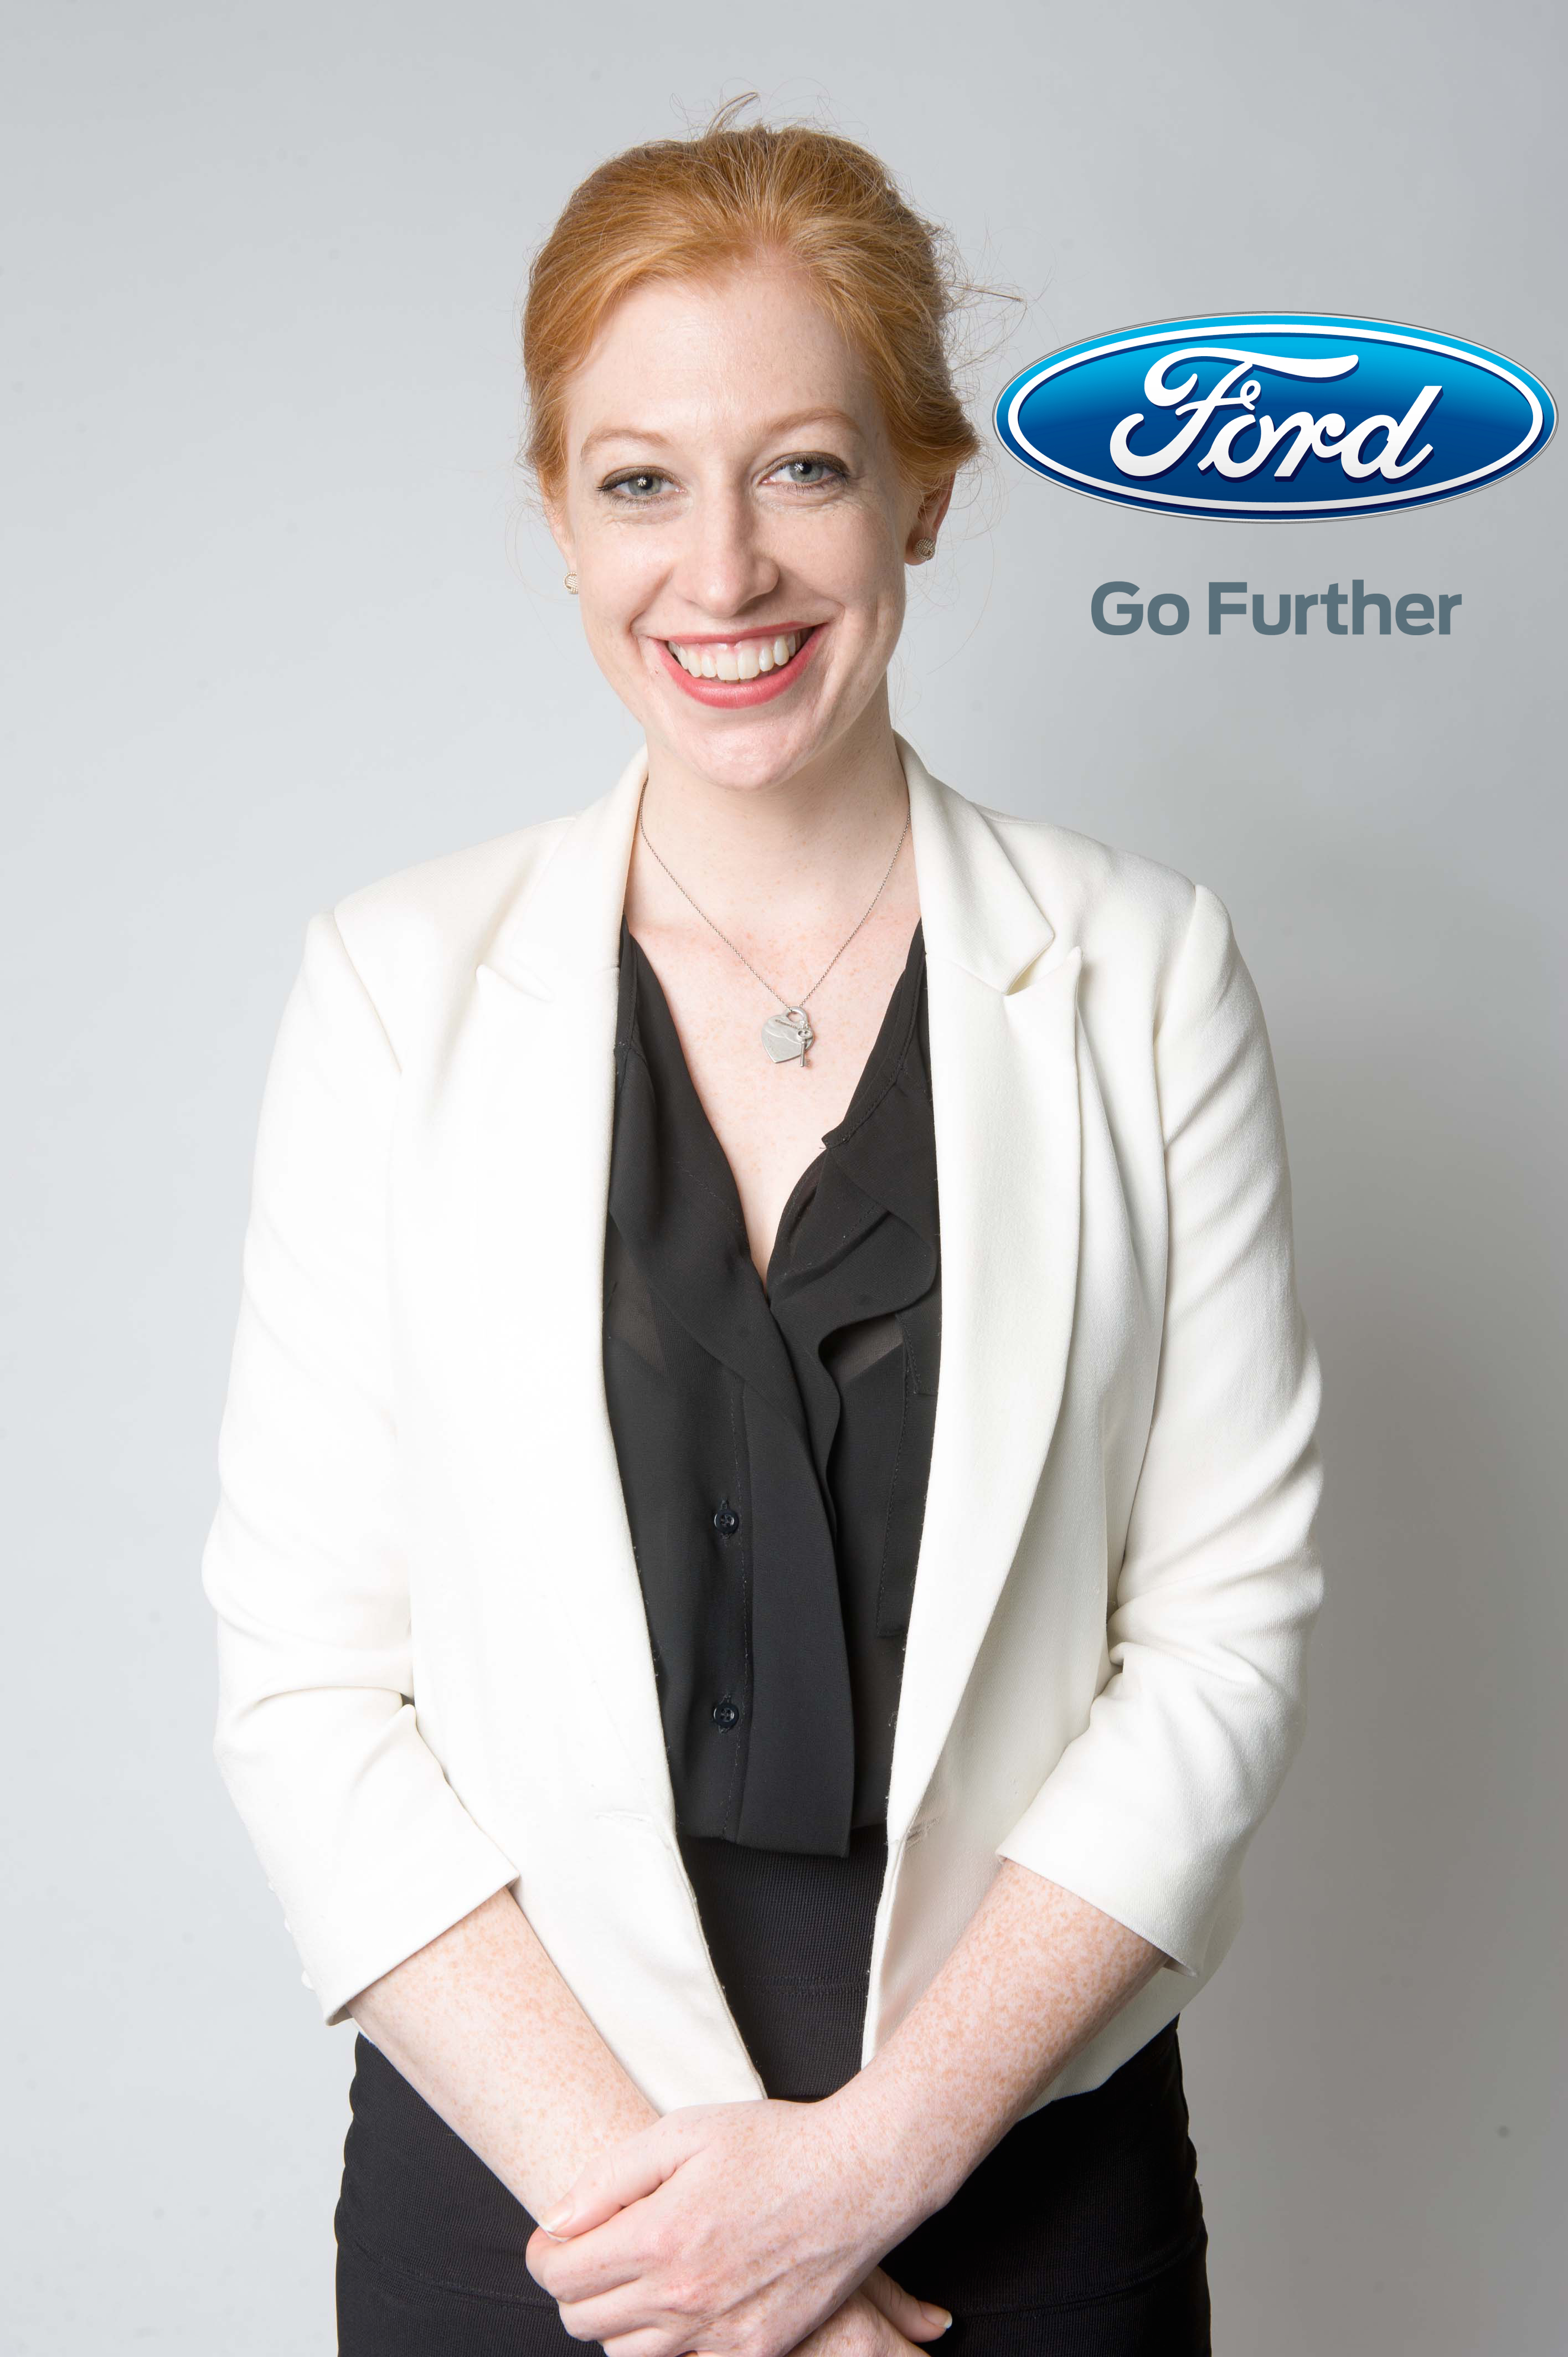 Ford Australia Industrial